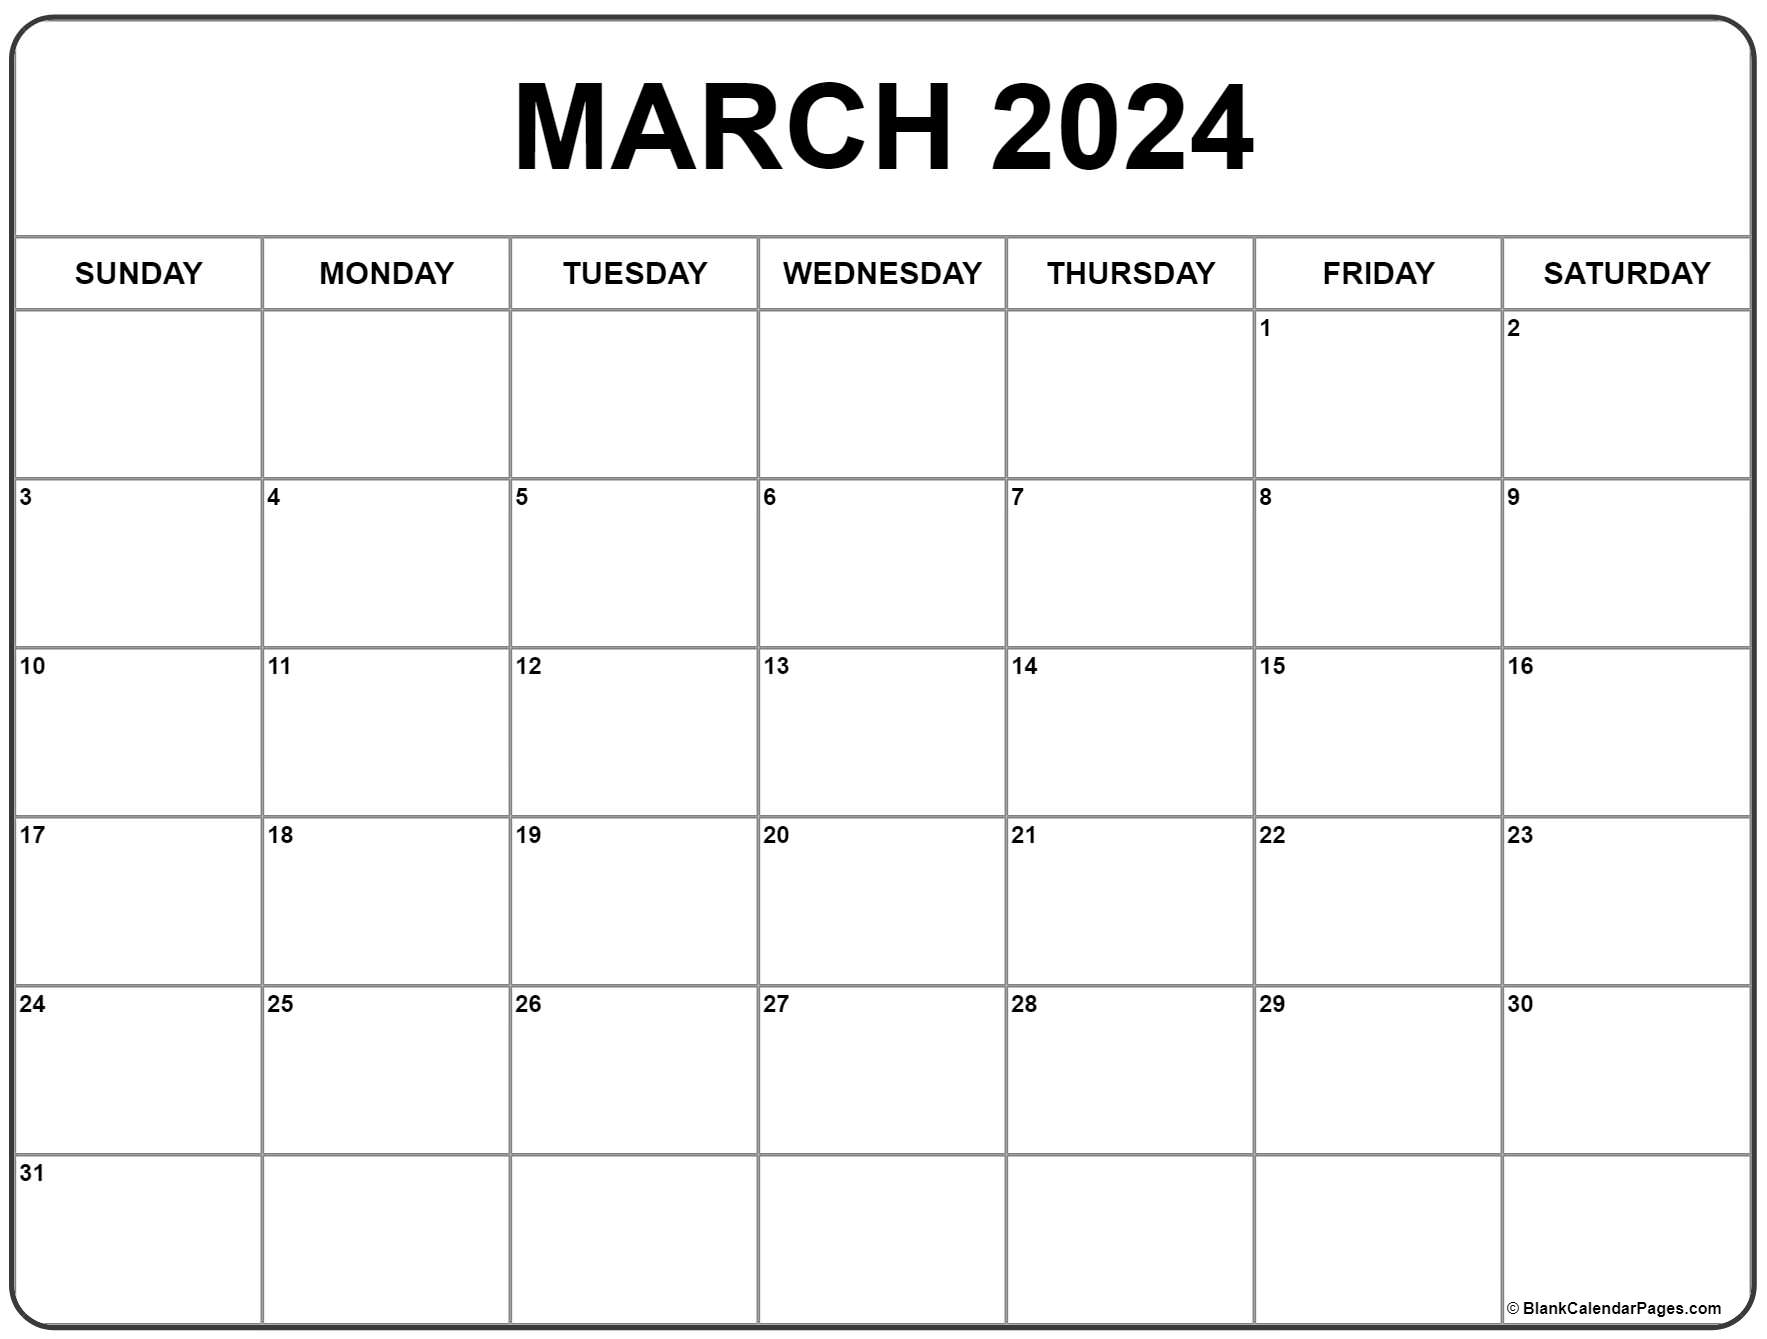 March 2024 Calendar | Free Printable Calendar for March Calendar 2024 Printable Free